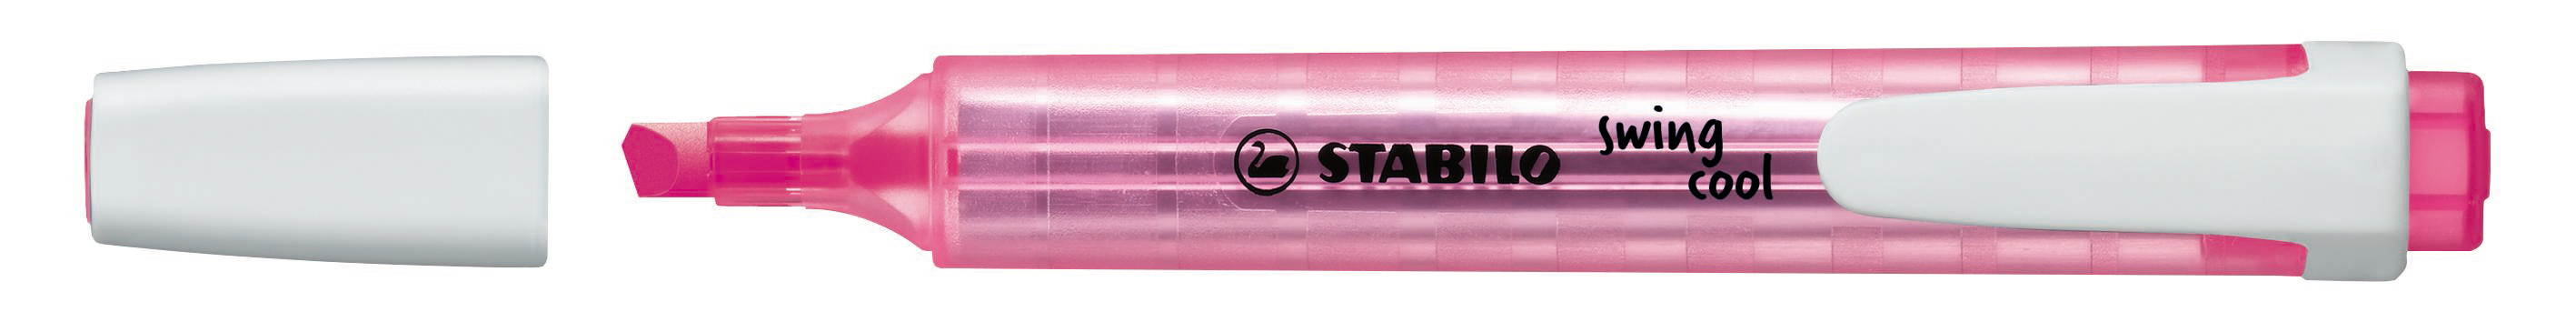 STABILO Textmarker Swing Cool pink<br>